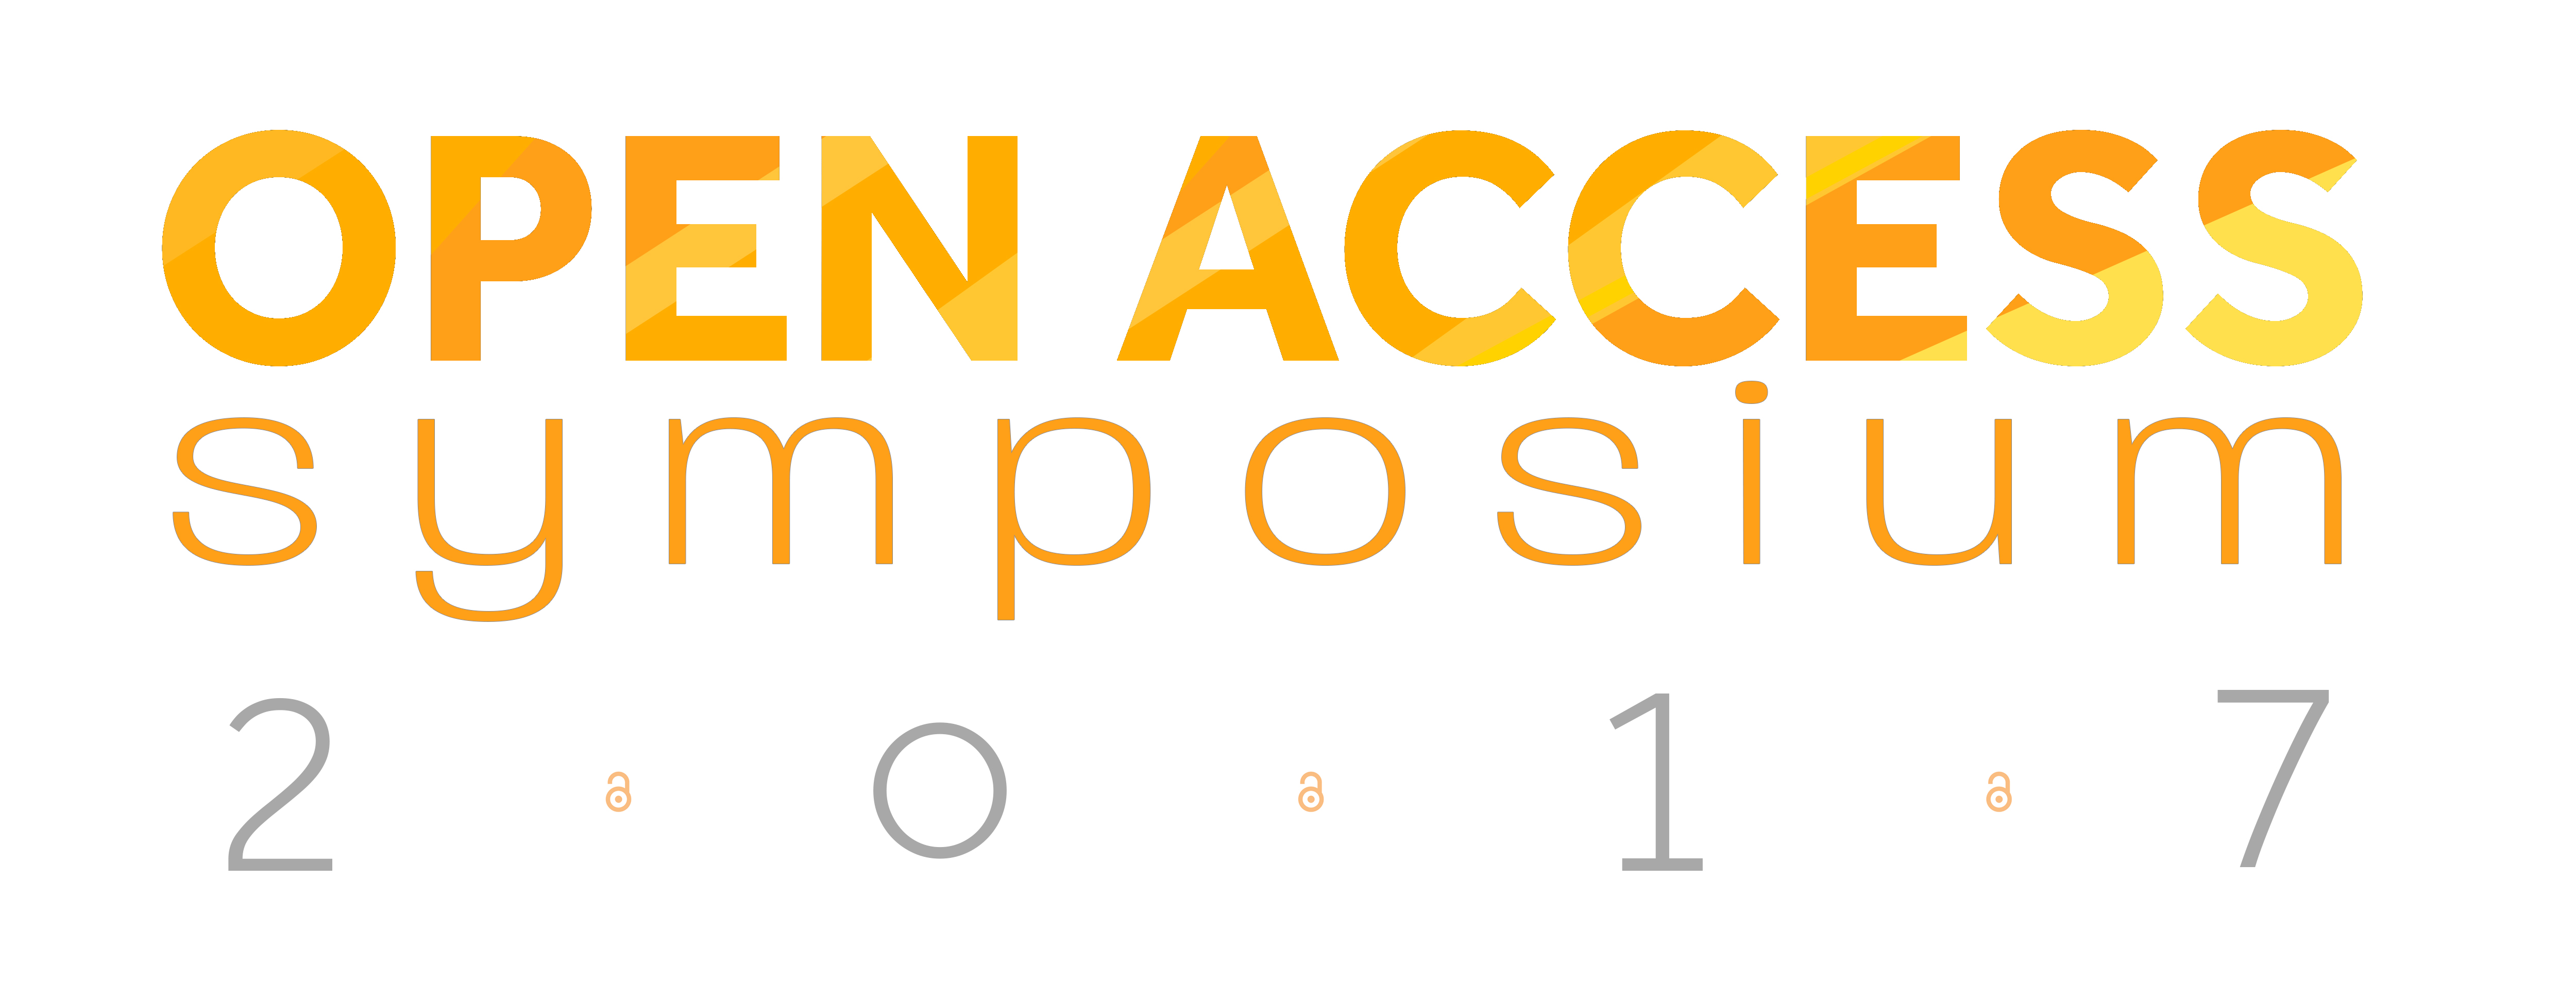 open access symposium 2017